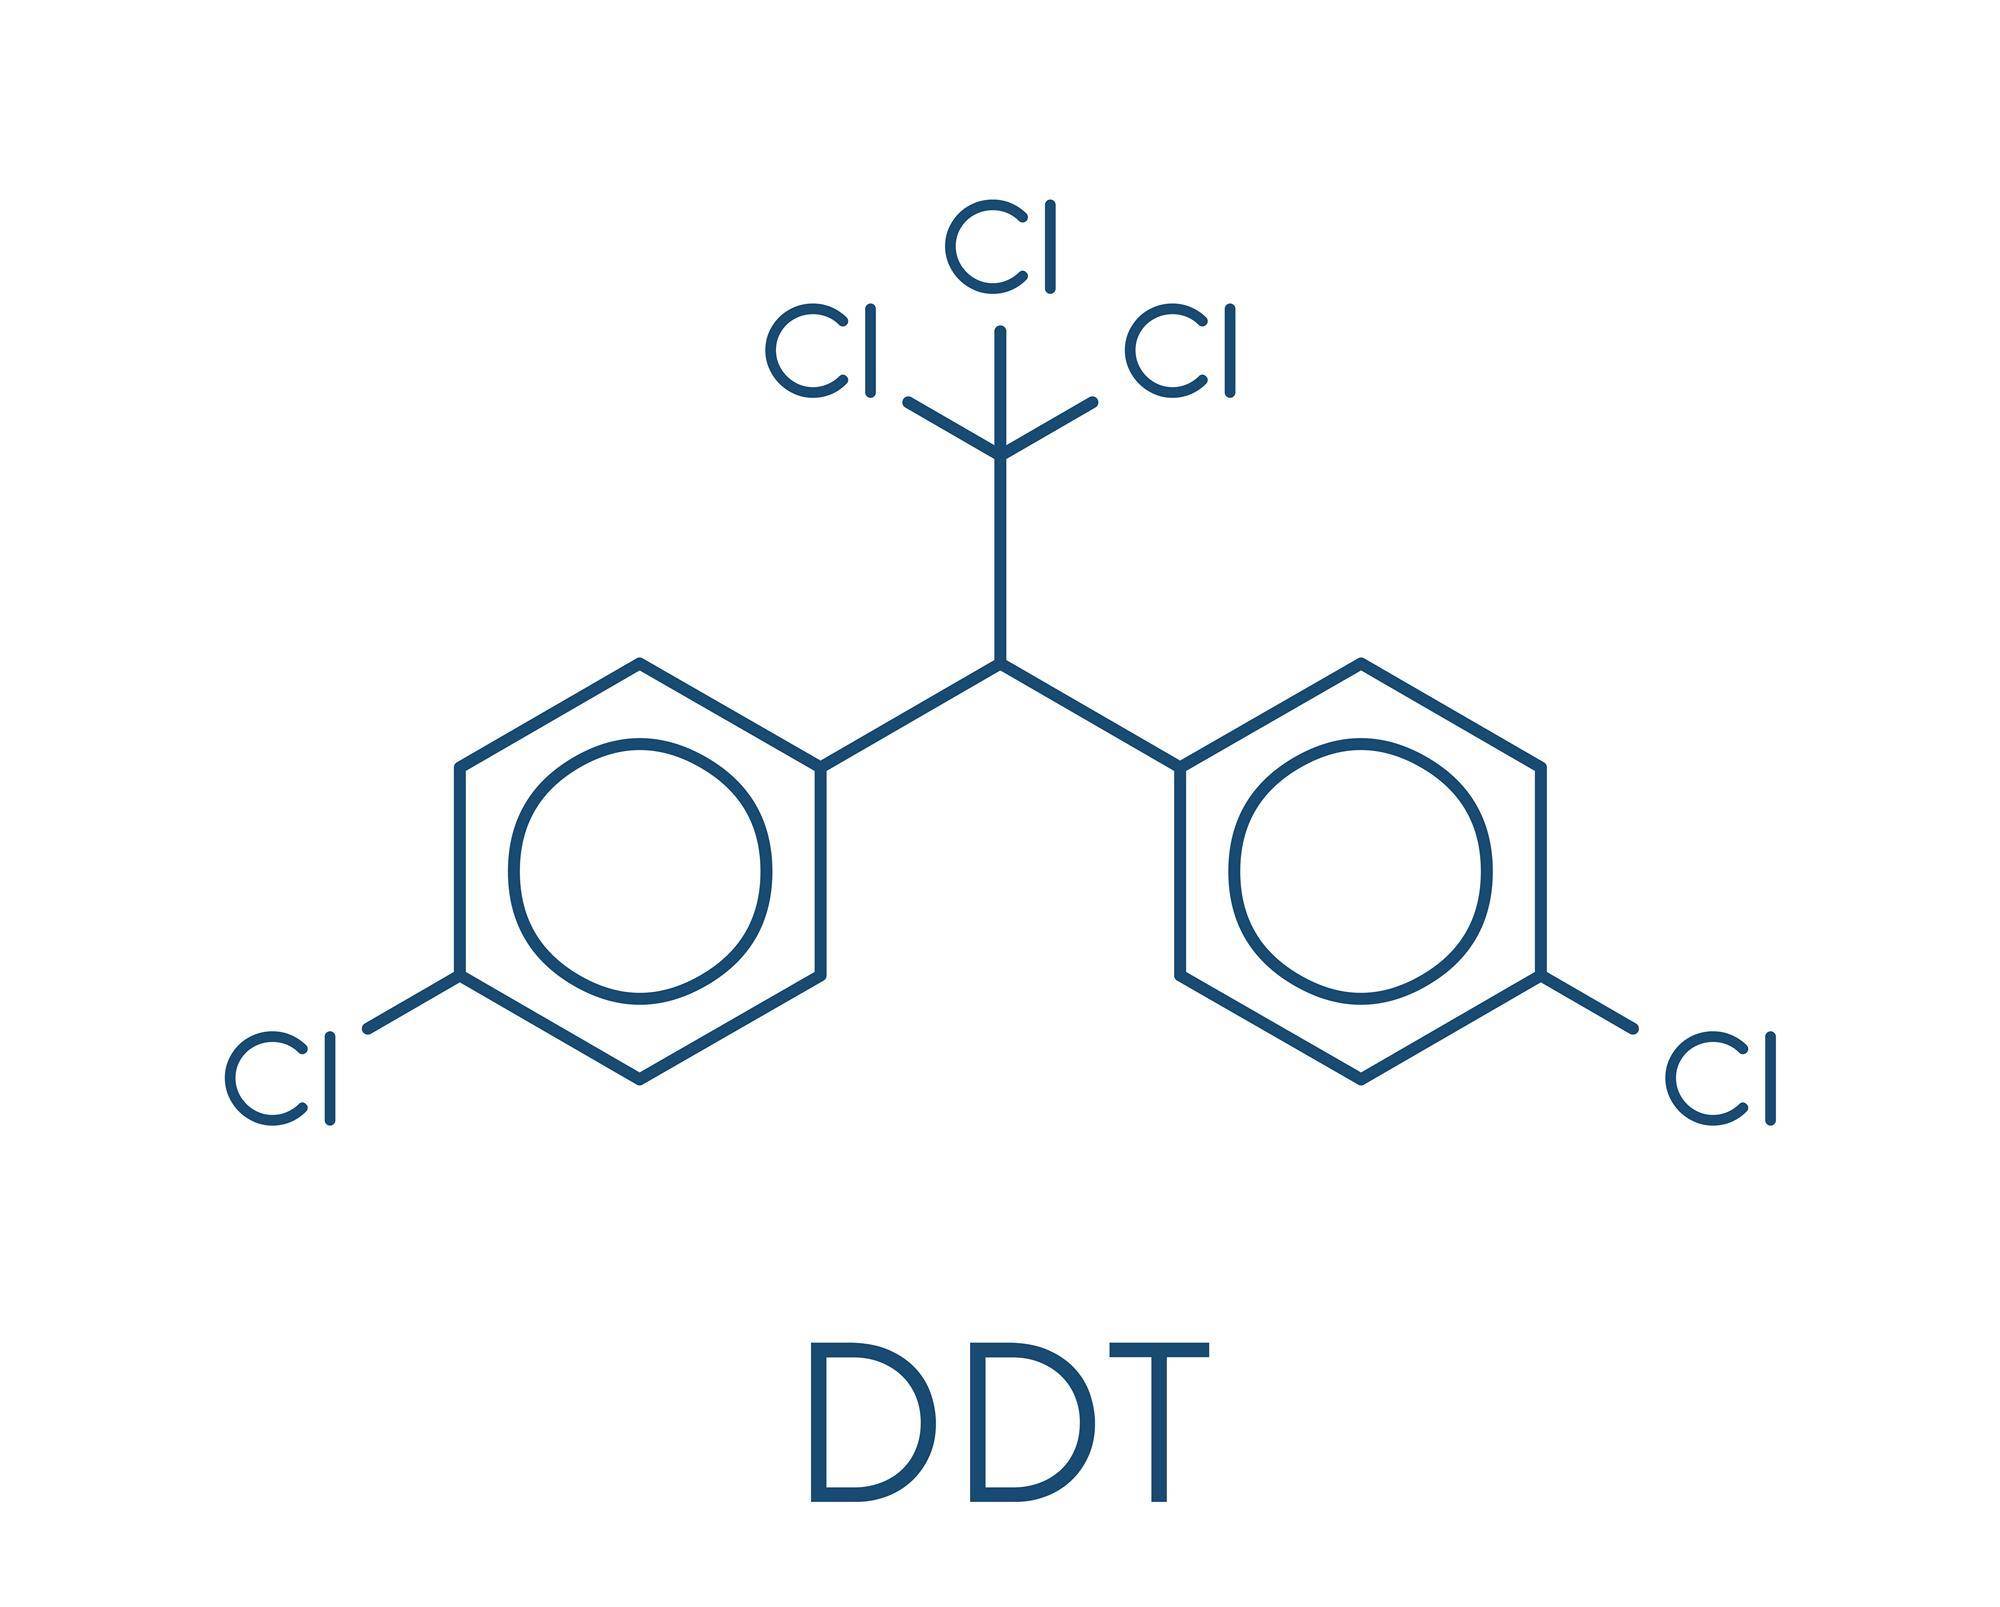 Первый пестицид. ДДТ пестицид формула. ДДТ хлорорганические пестициды. Формула ДДТ дихлордифенилтрихлорметилметан. ДДТ инсектицид дуст.